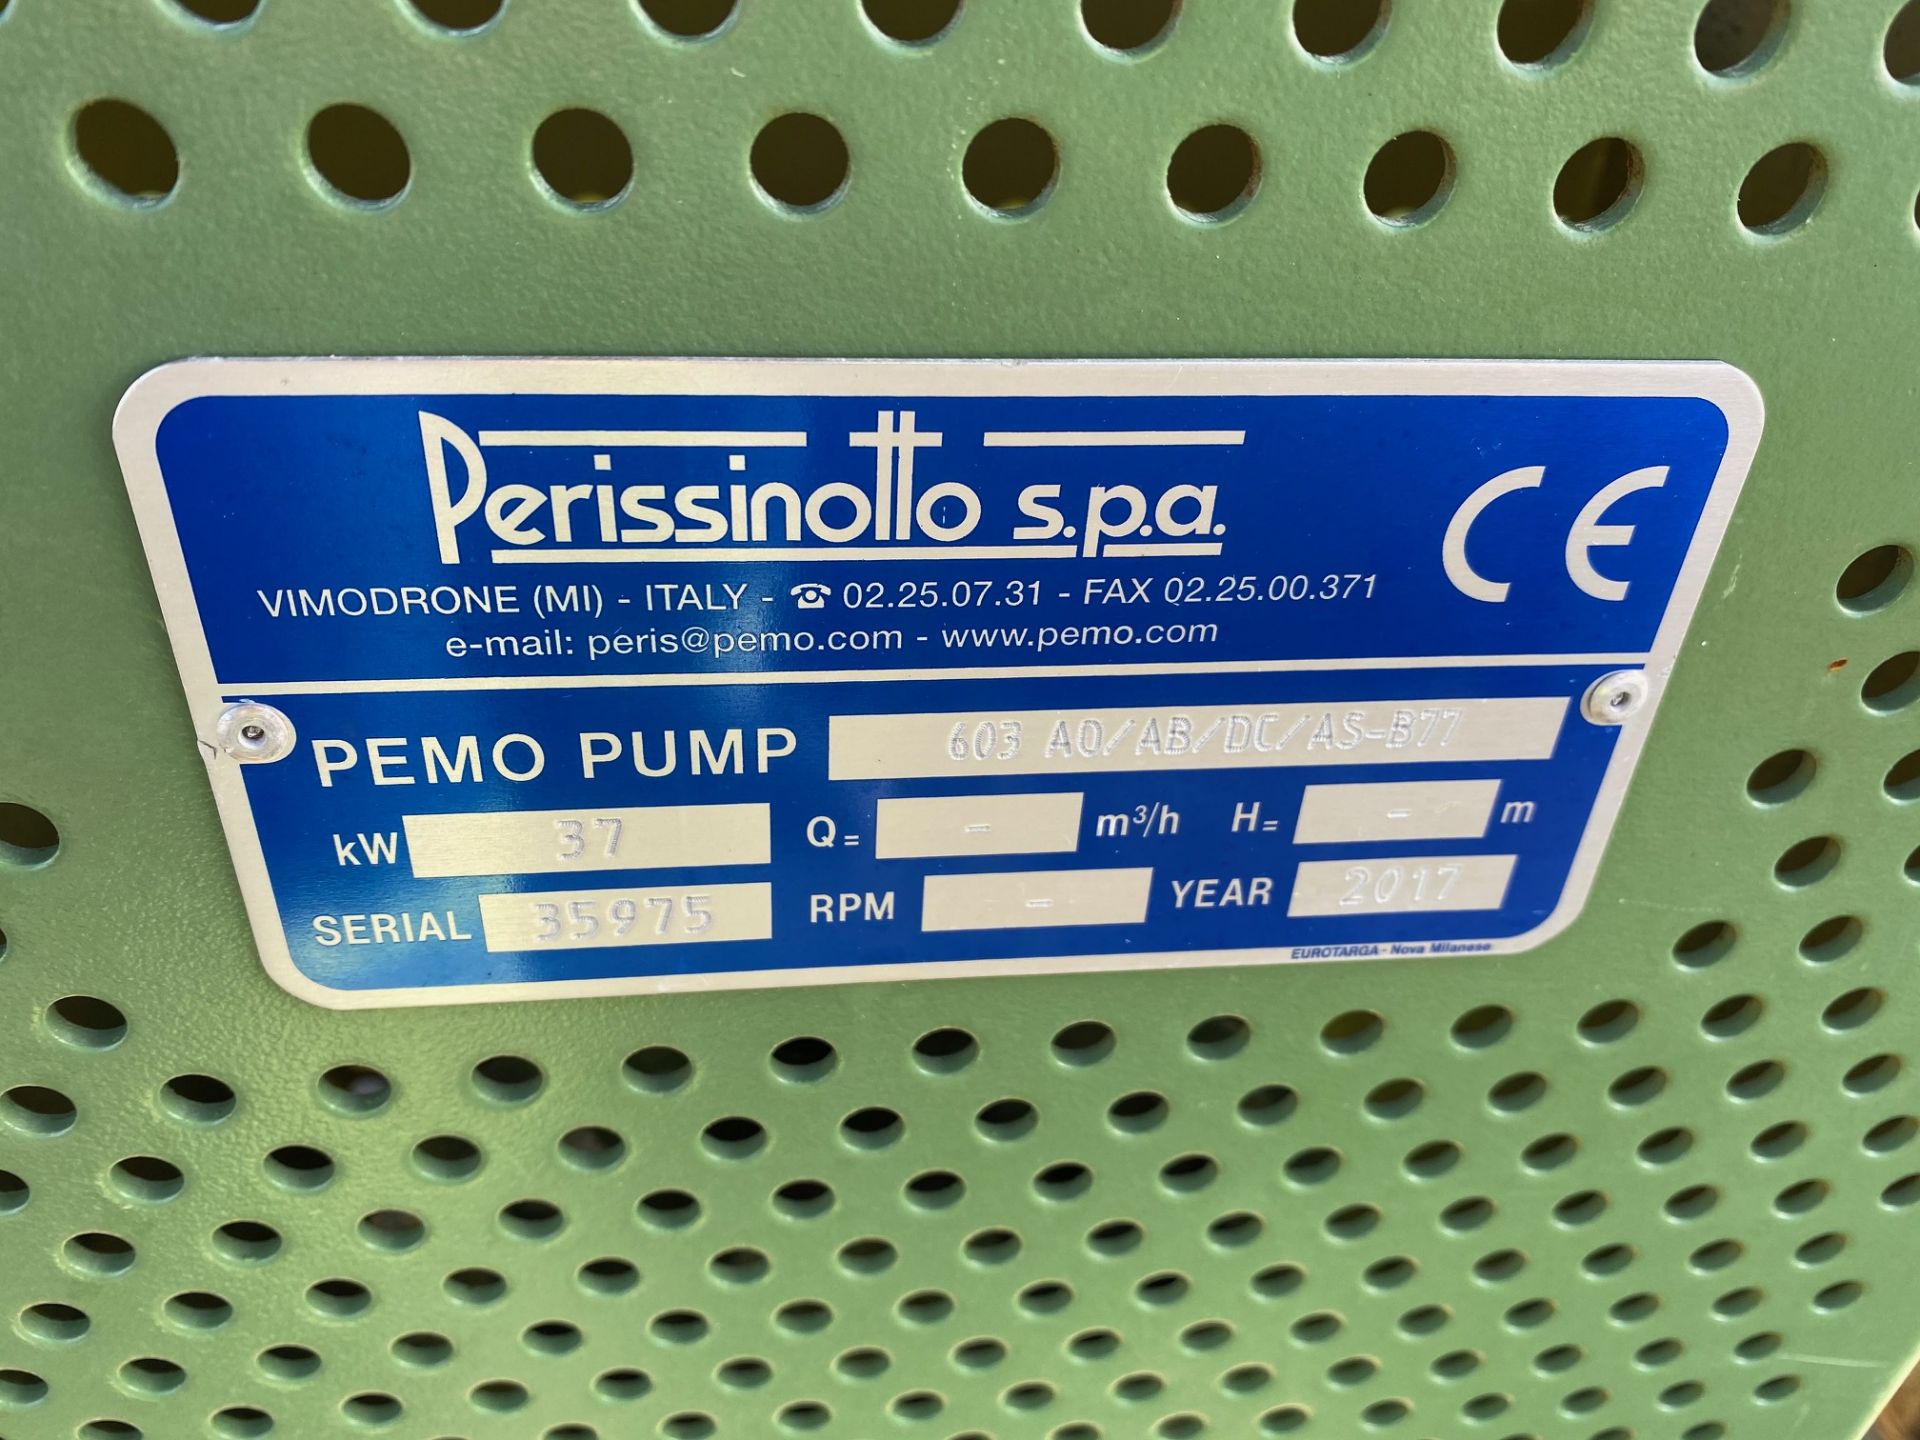 Perissinotto SPA, Model: 603AC/AB/AS-B77 Pemo Pump, 3Ph, 37kw Motor, DOM: 2017, Serial No. 35975 ( - Image 7 of 8